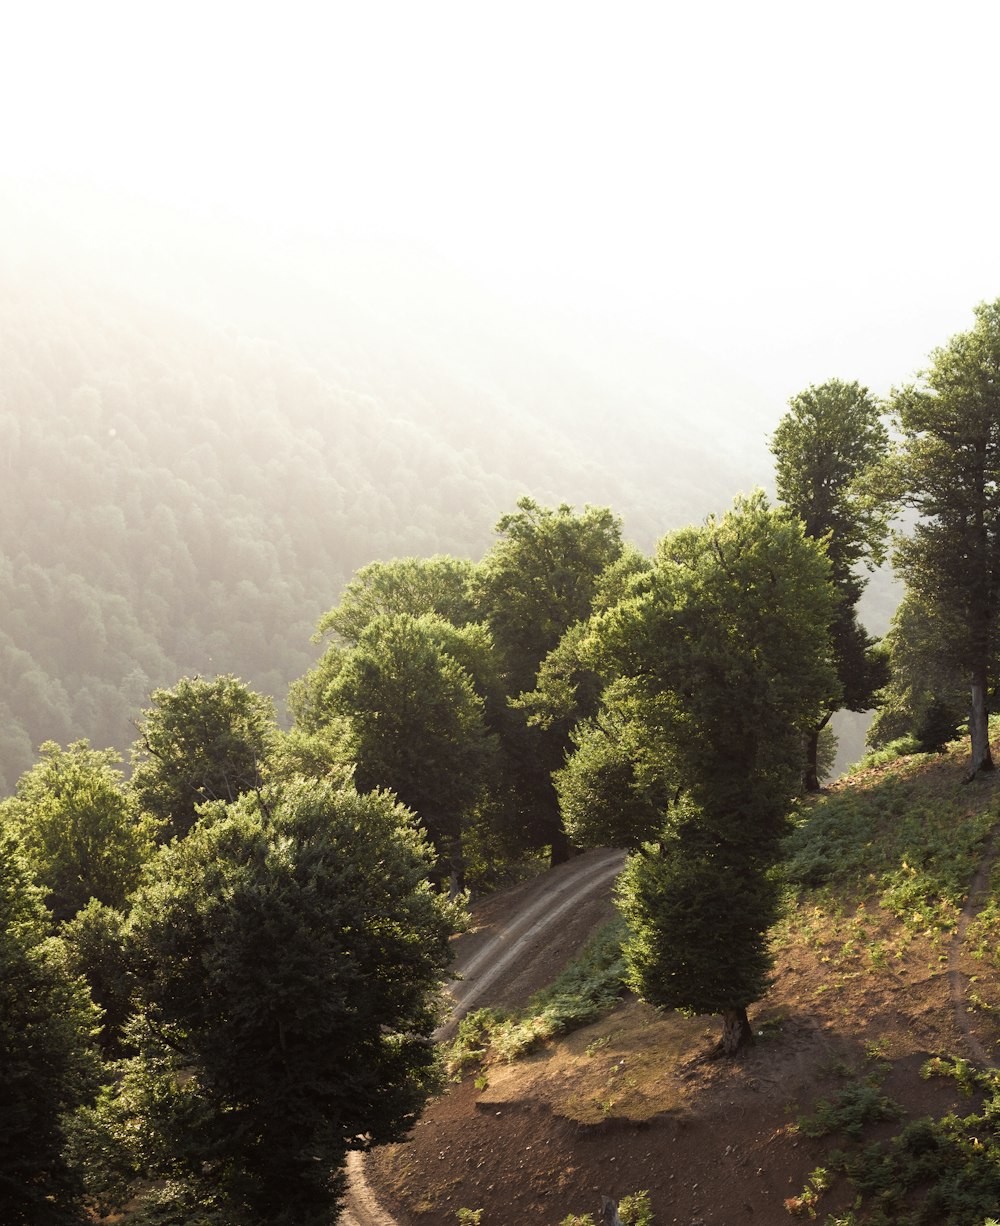 Un camino rodeado de árboles